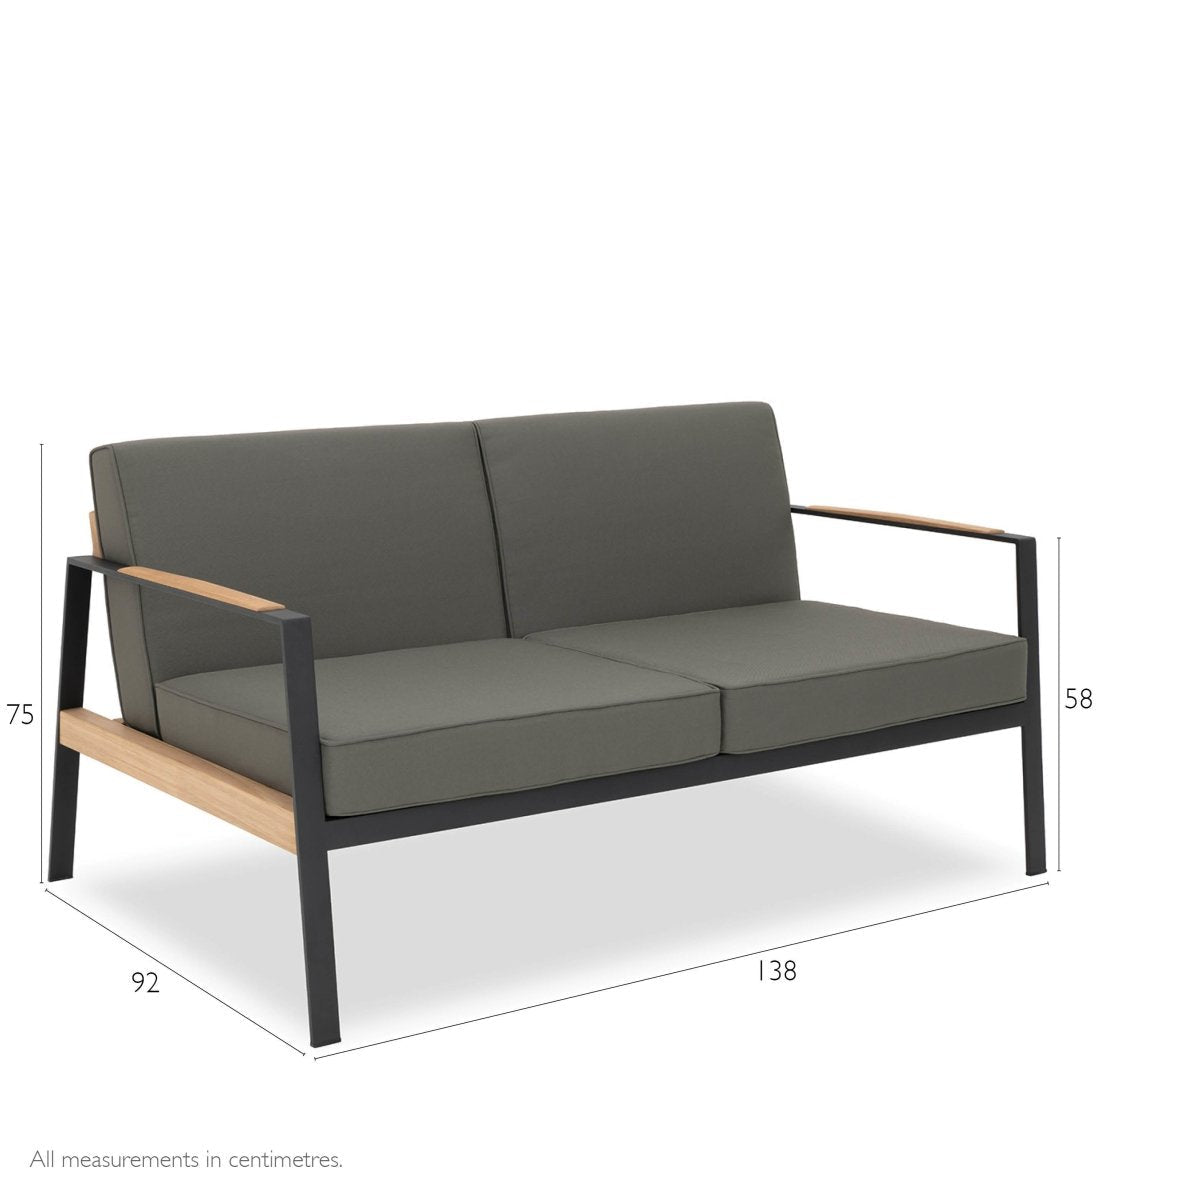 California 2 seat sofa dimensions